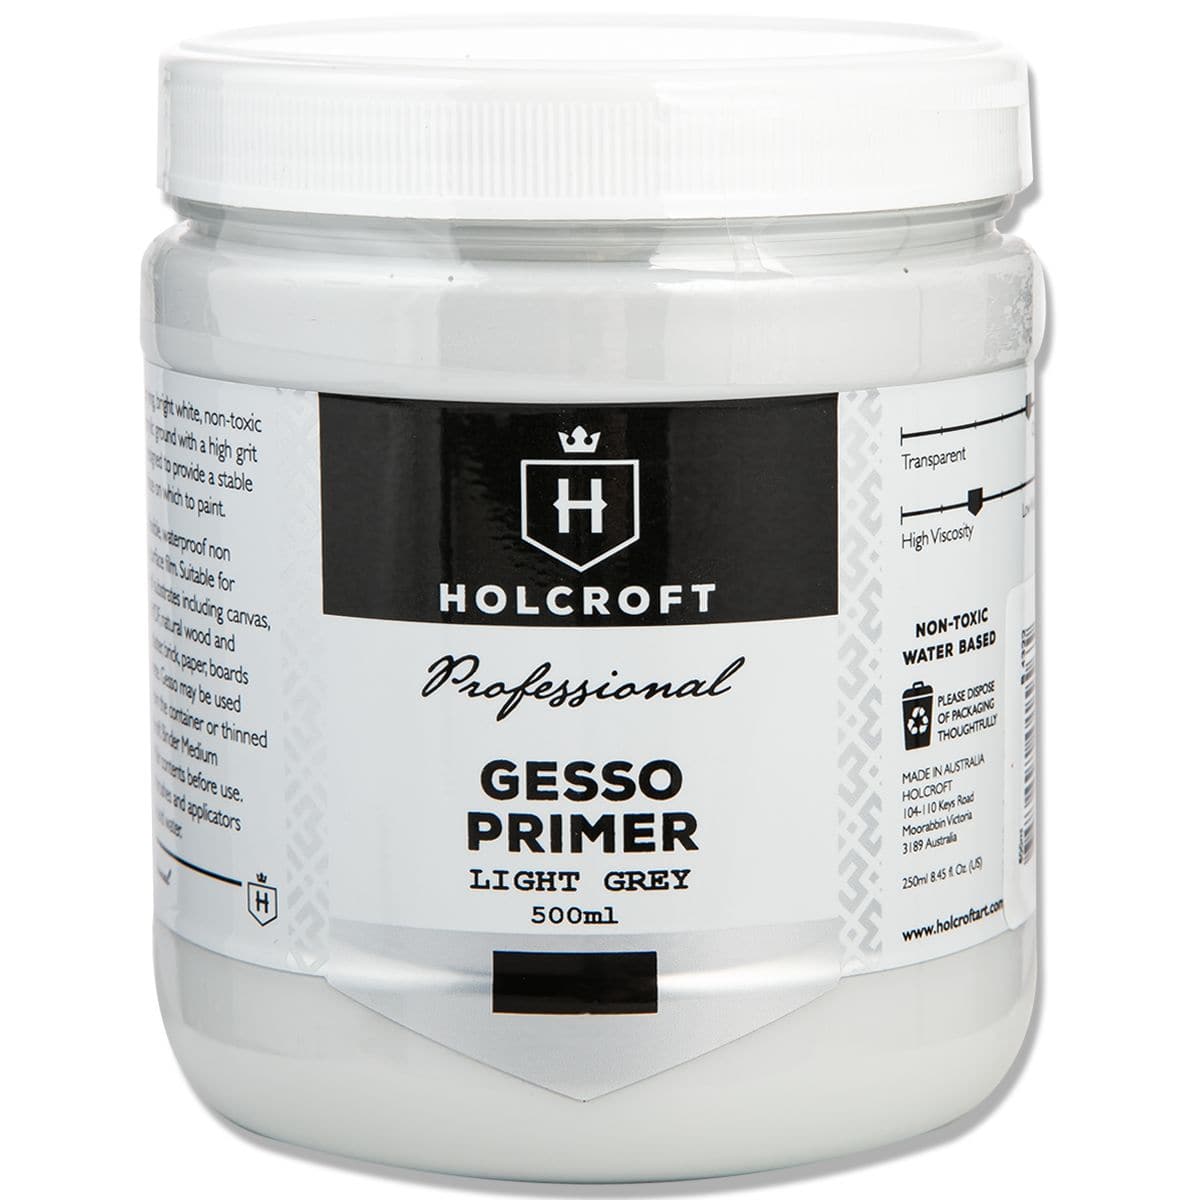 Image of Holcroft Professional Acrylic Light Grey Gesso 500mL